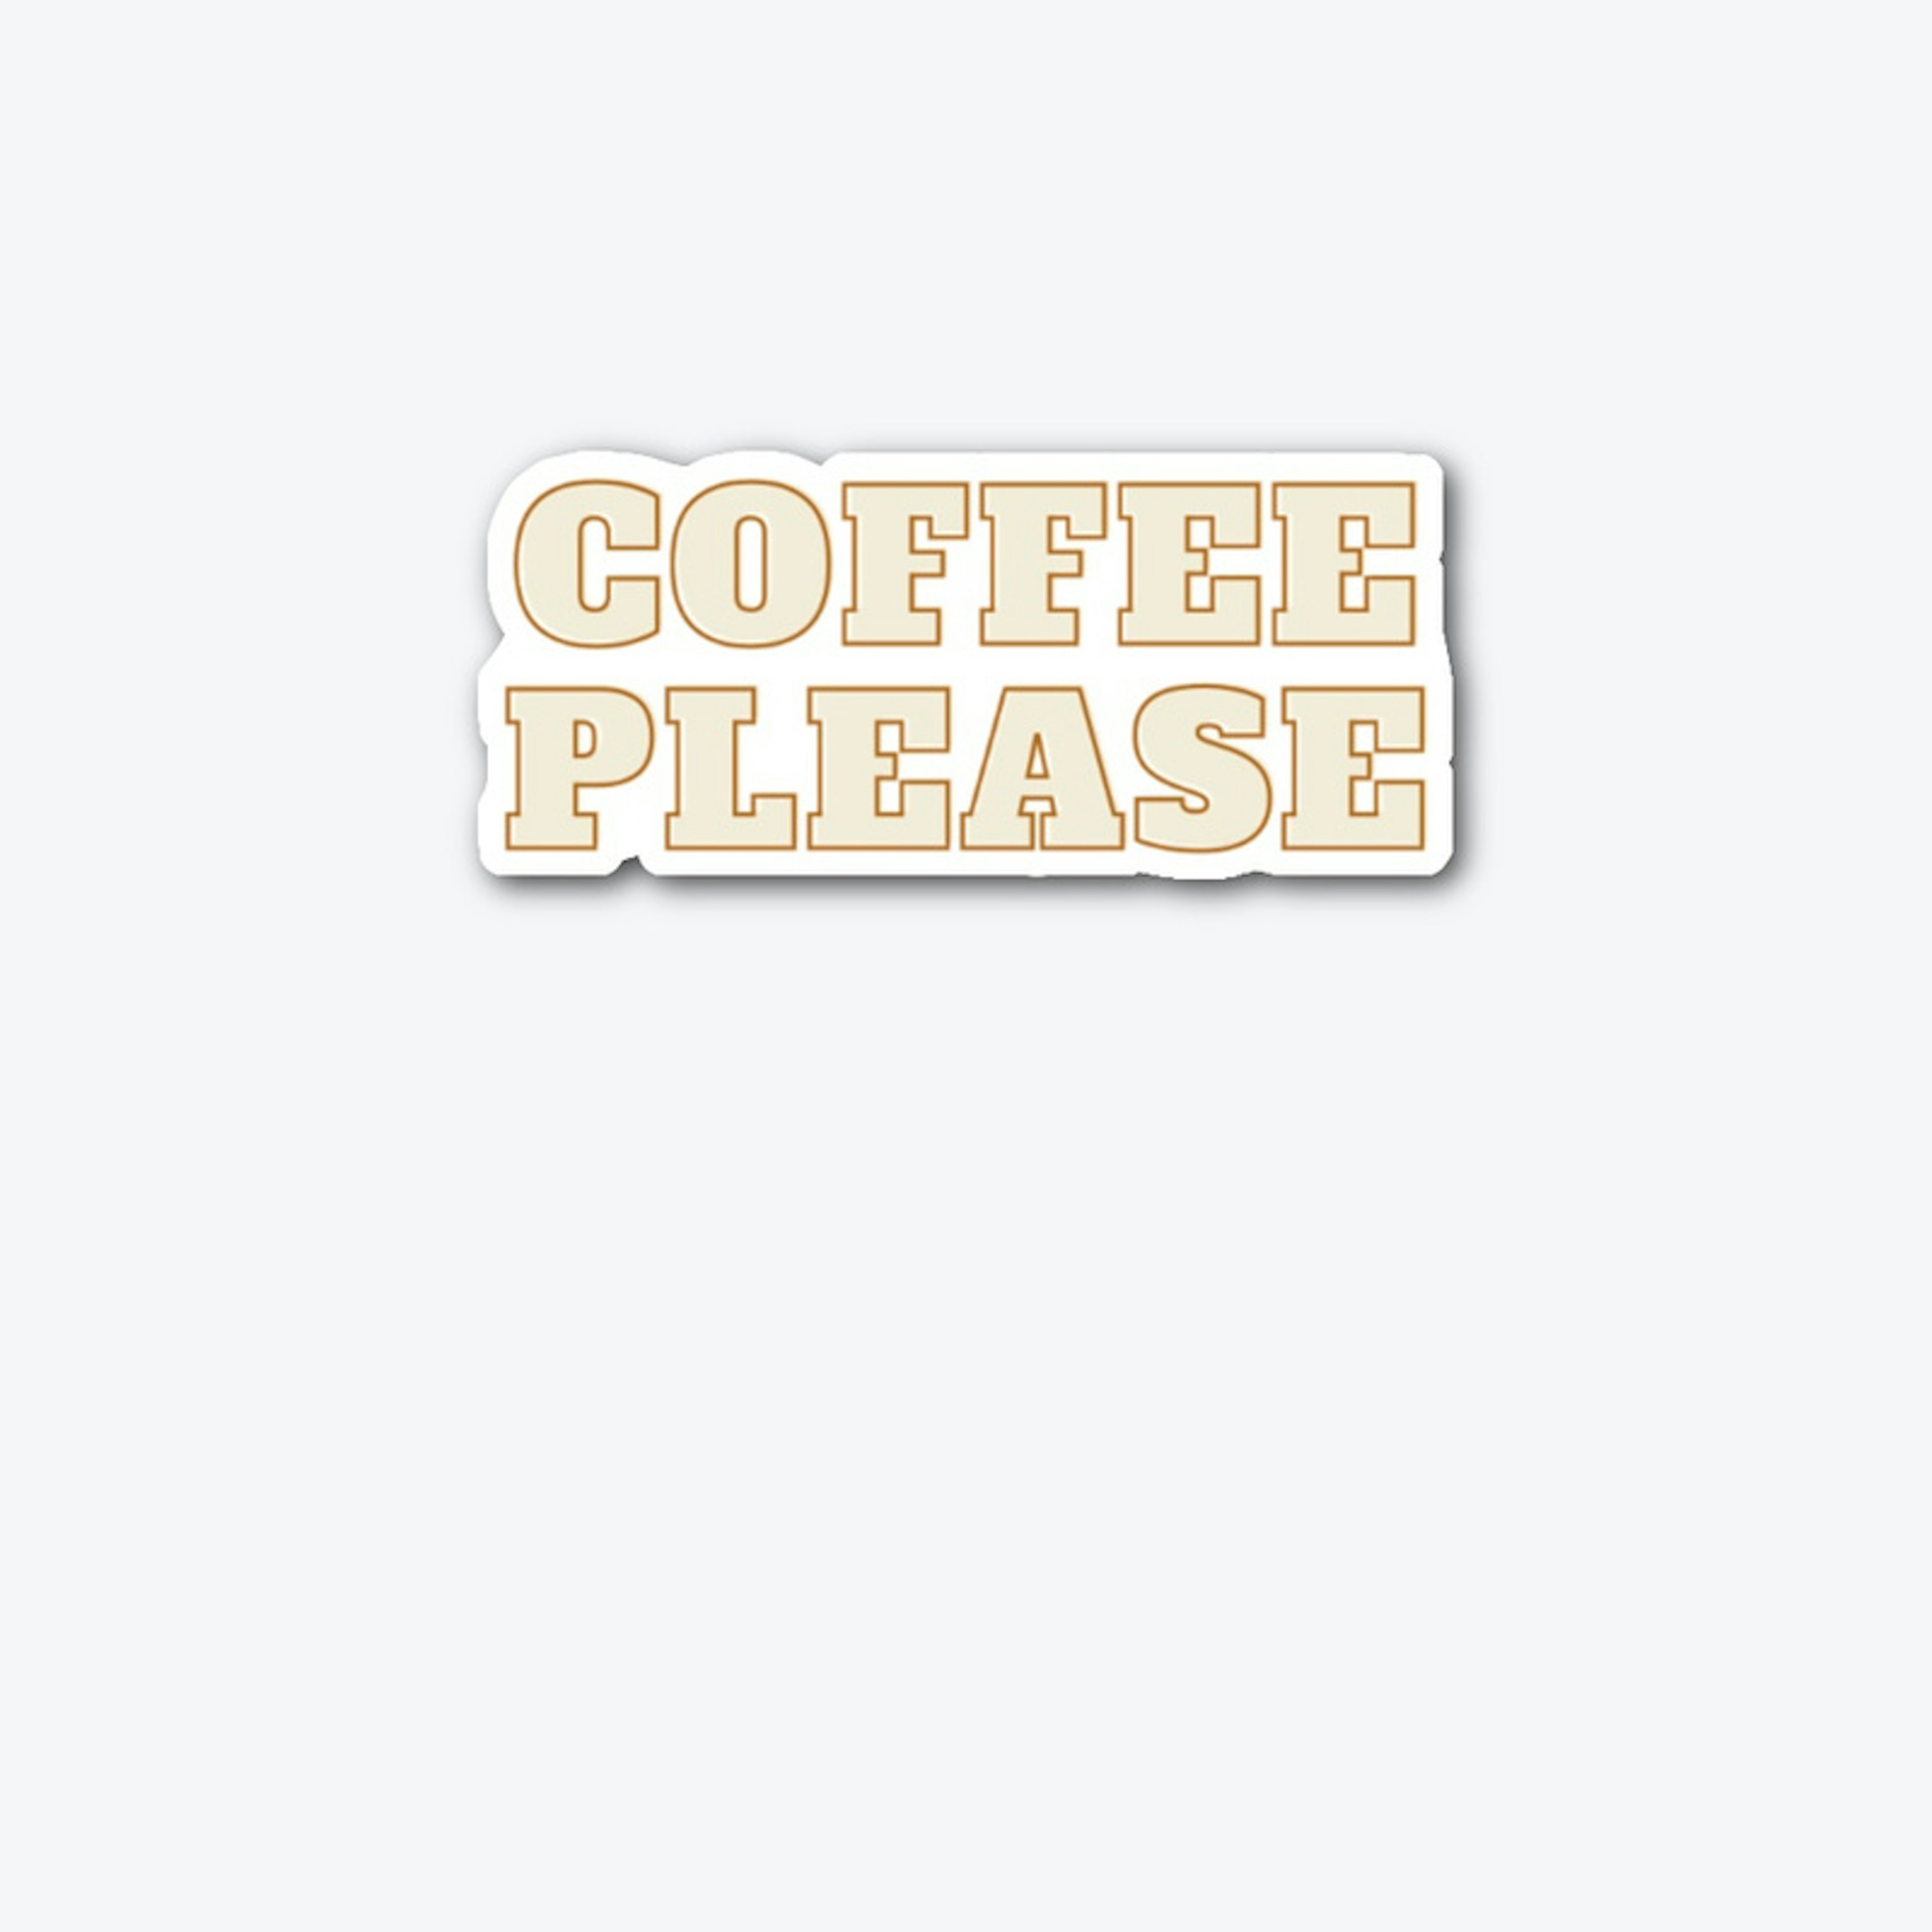 Coffee Please